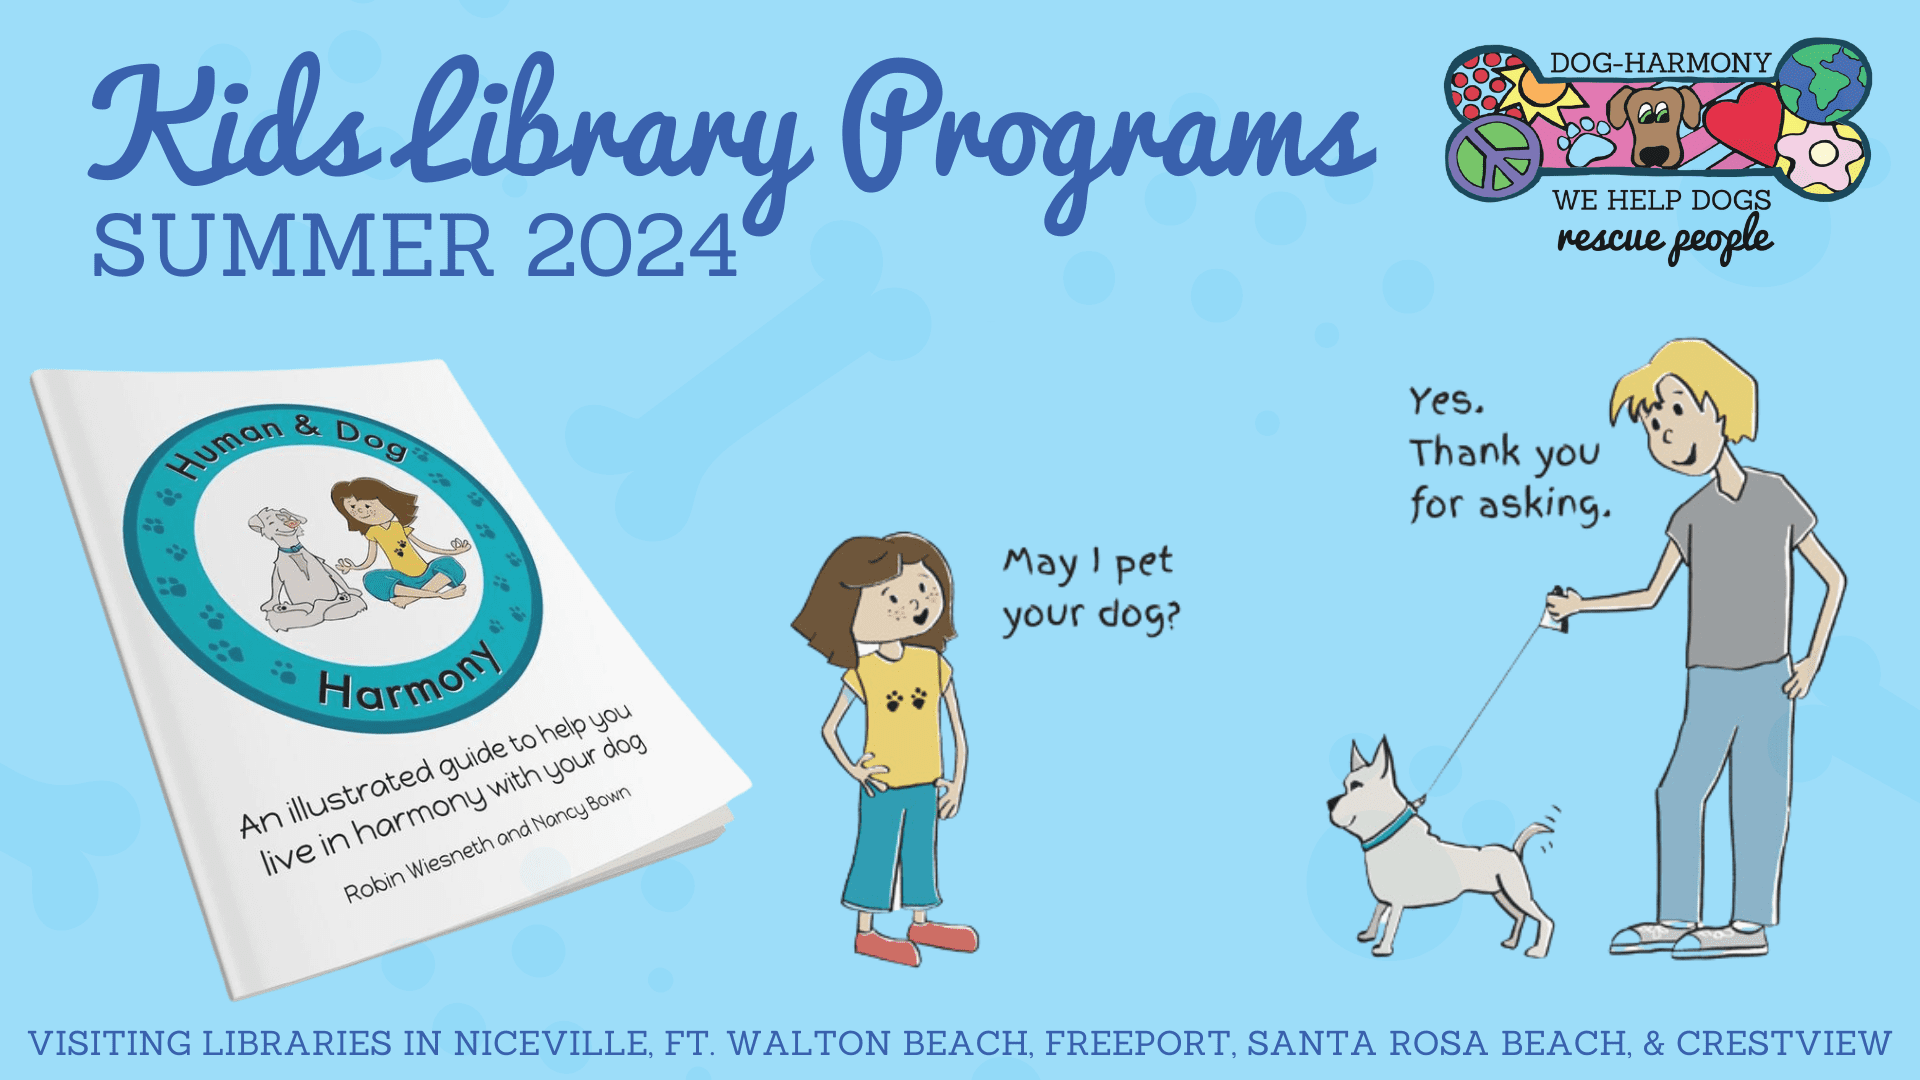 Upcoming Kids & Dog-Harmony Programs at local libraries during summer 2024